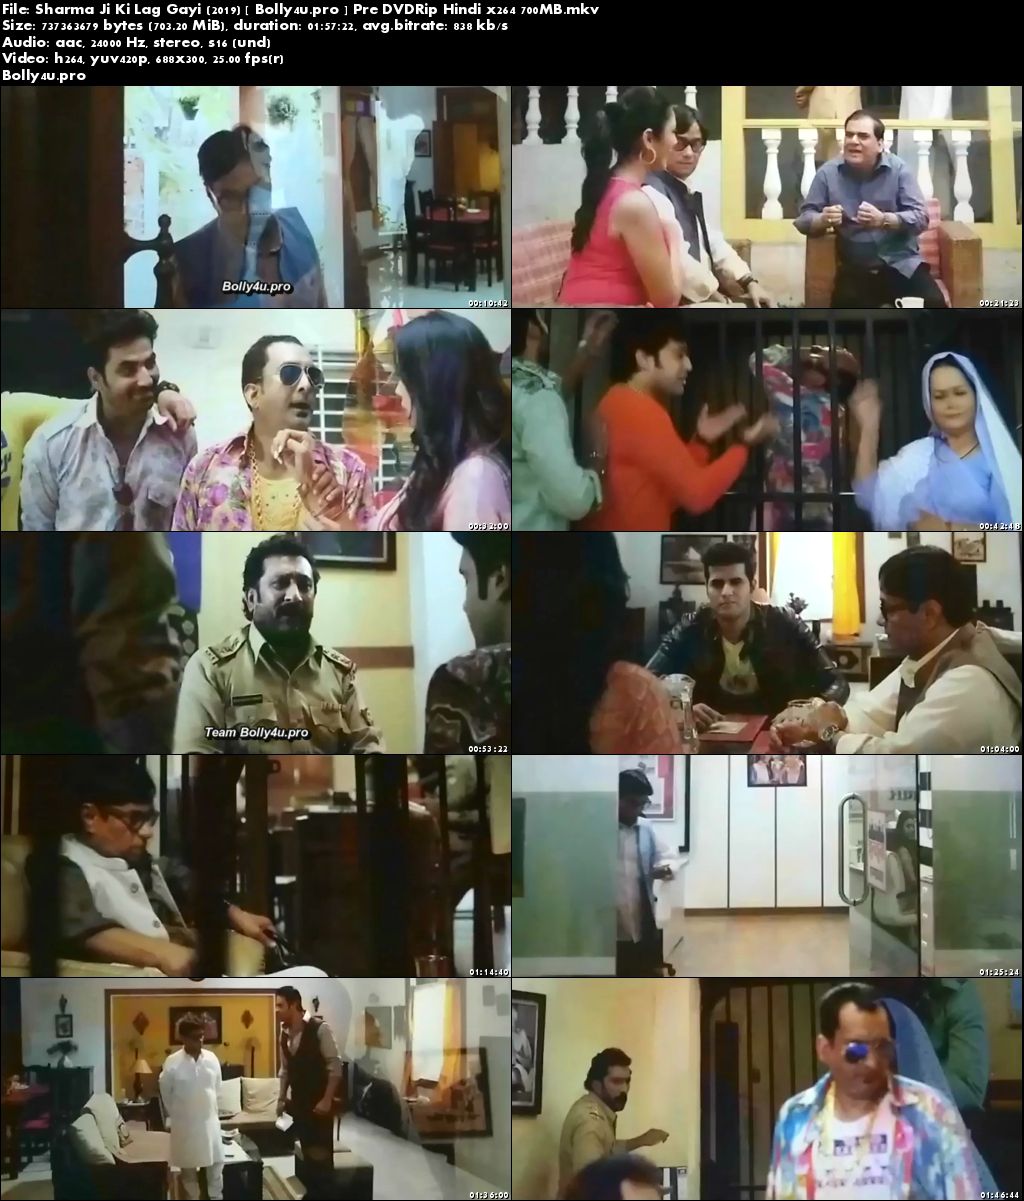 Sharma Ji Ki Lag Gayi 2019 Pre DVDRip 350MB Hindi 480p Download